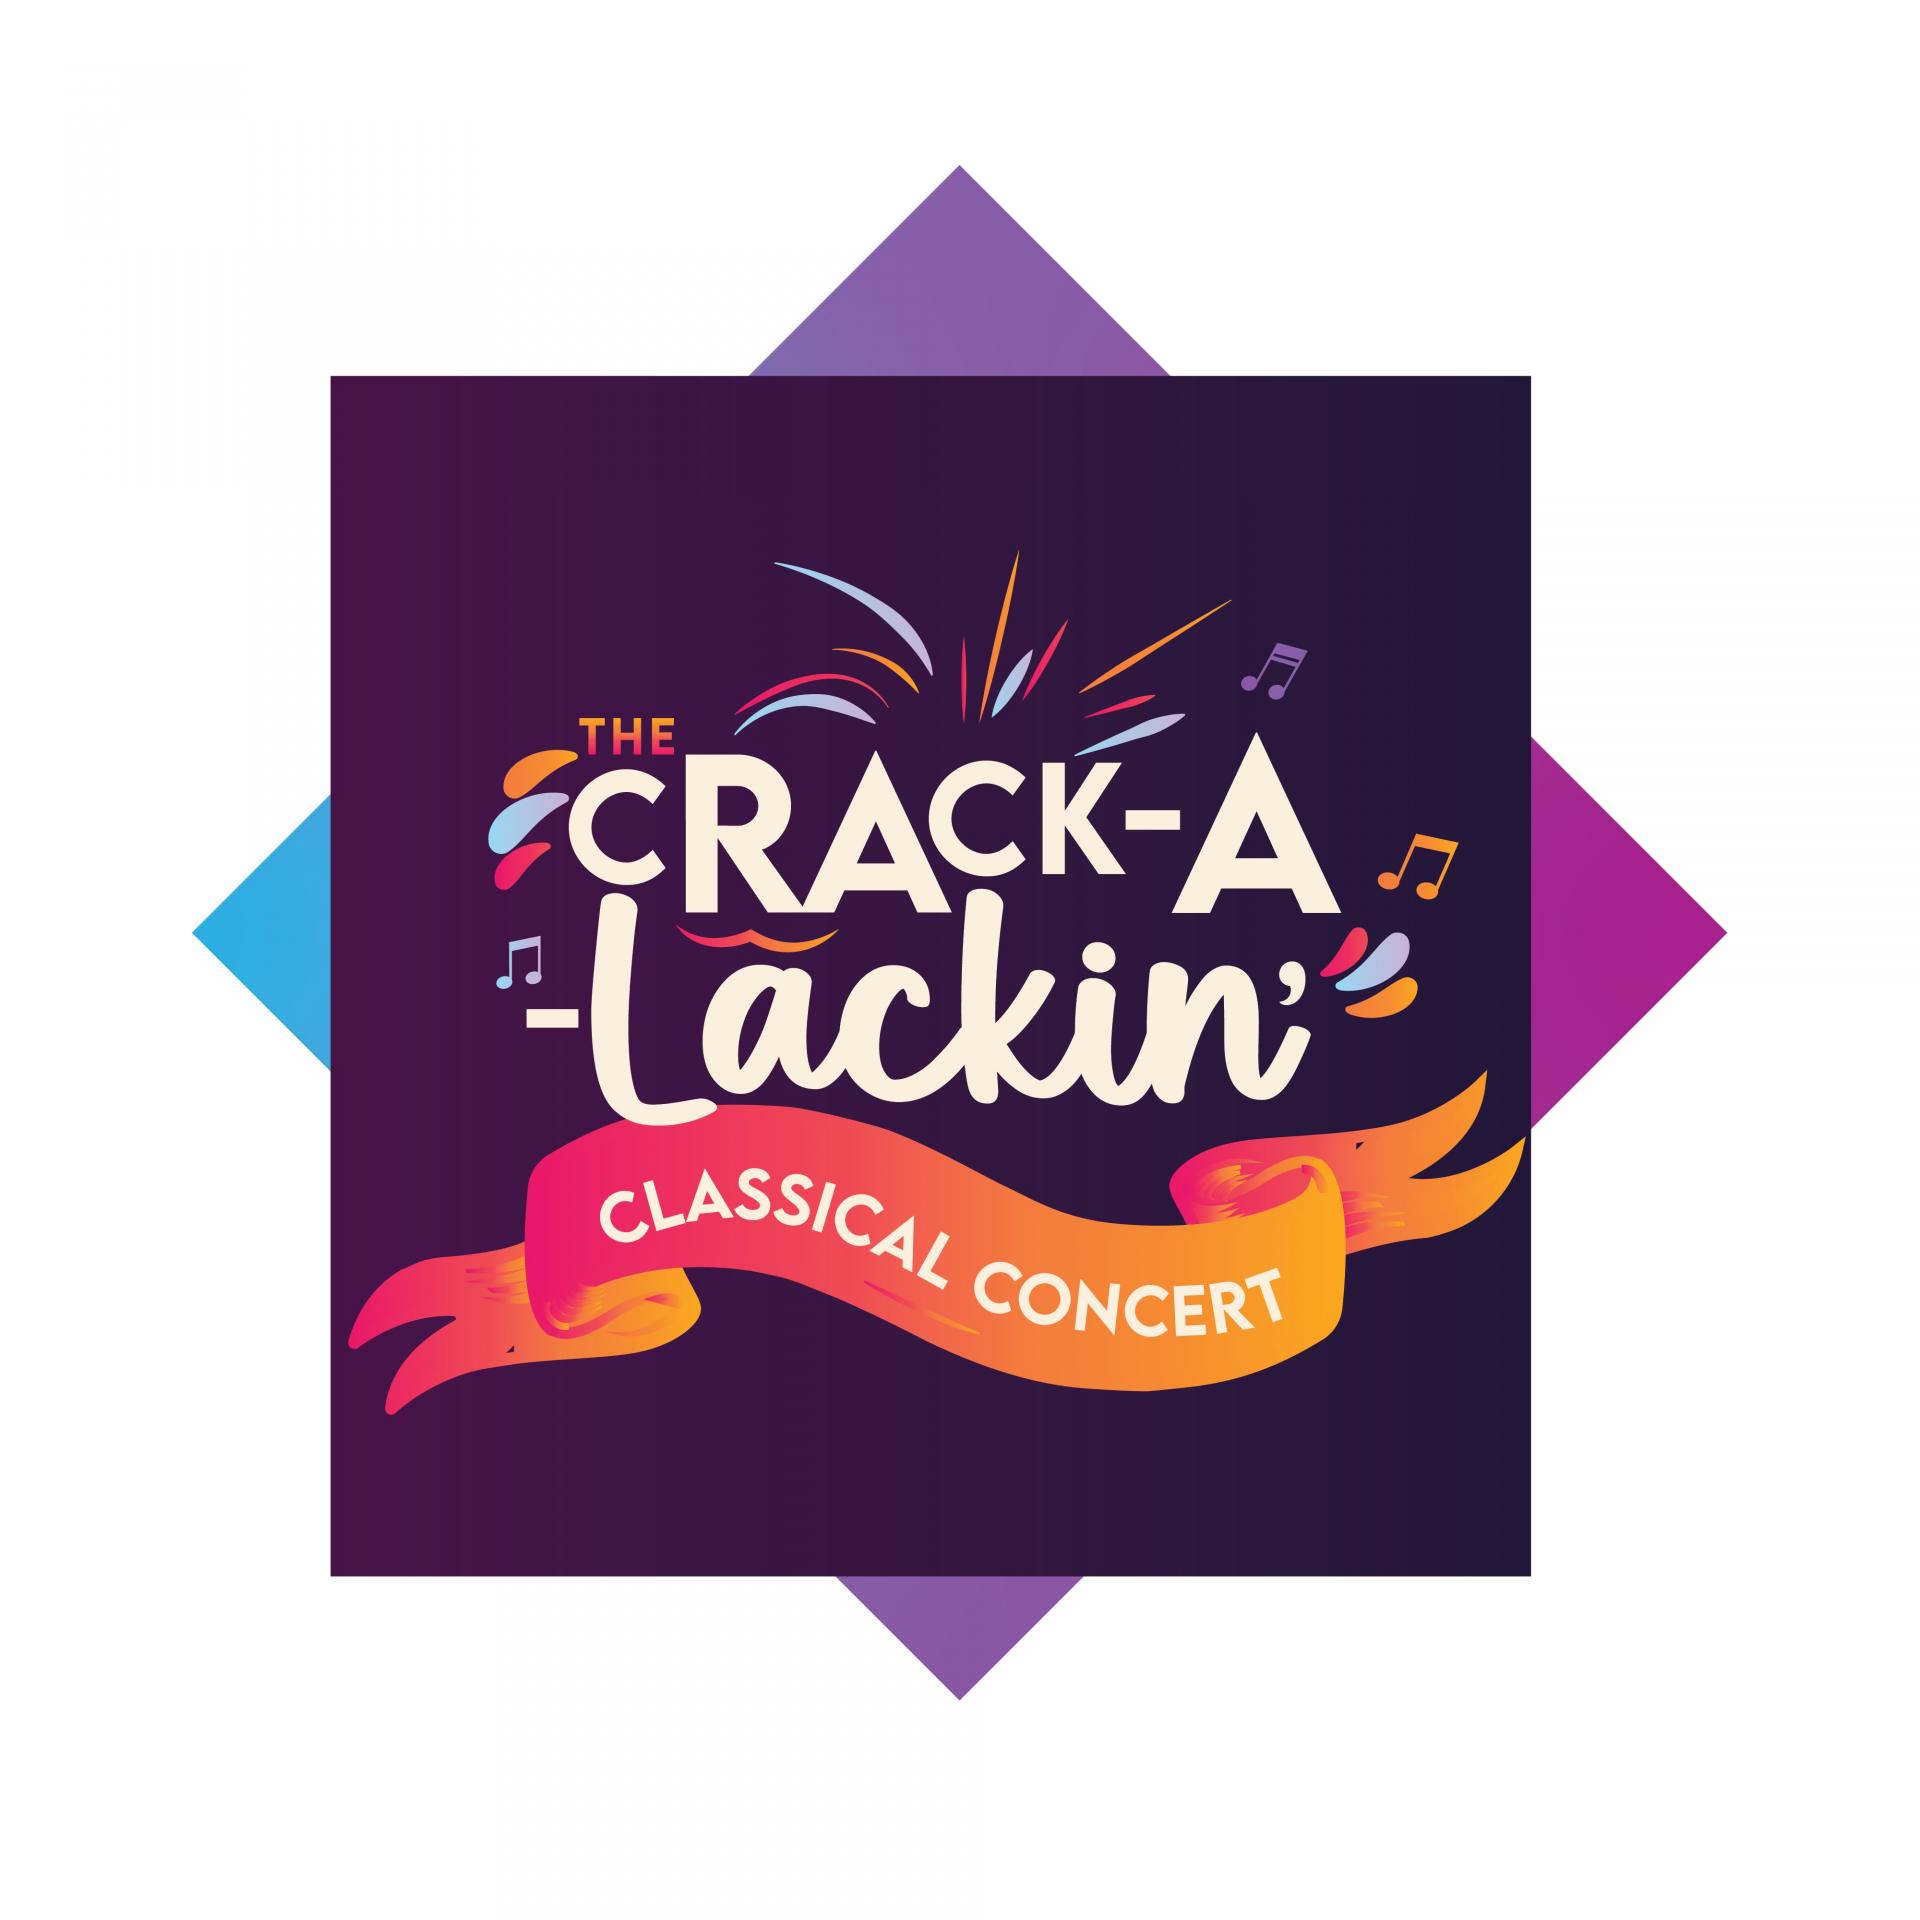 The Crack-a-lackin' Classical Concert